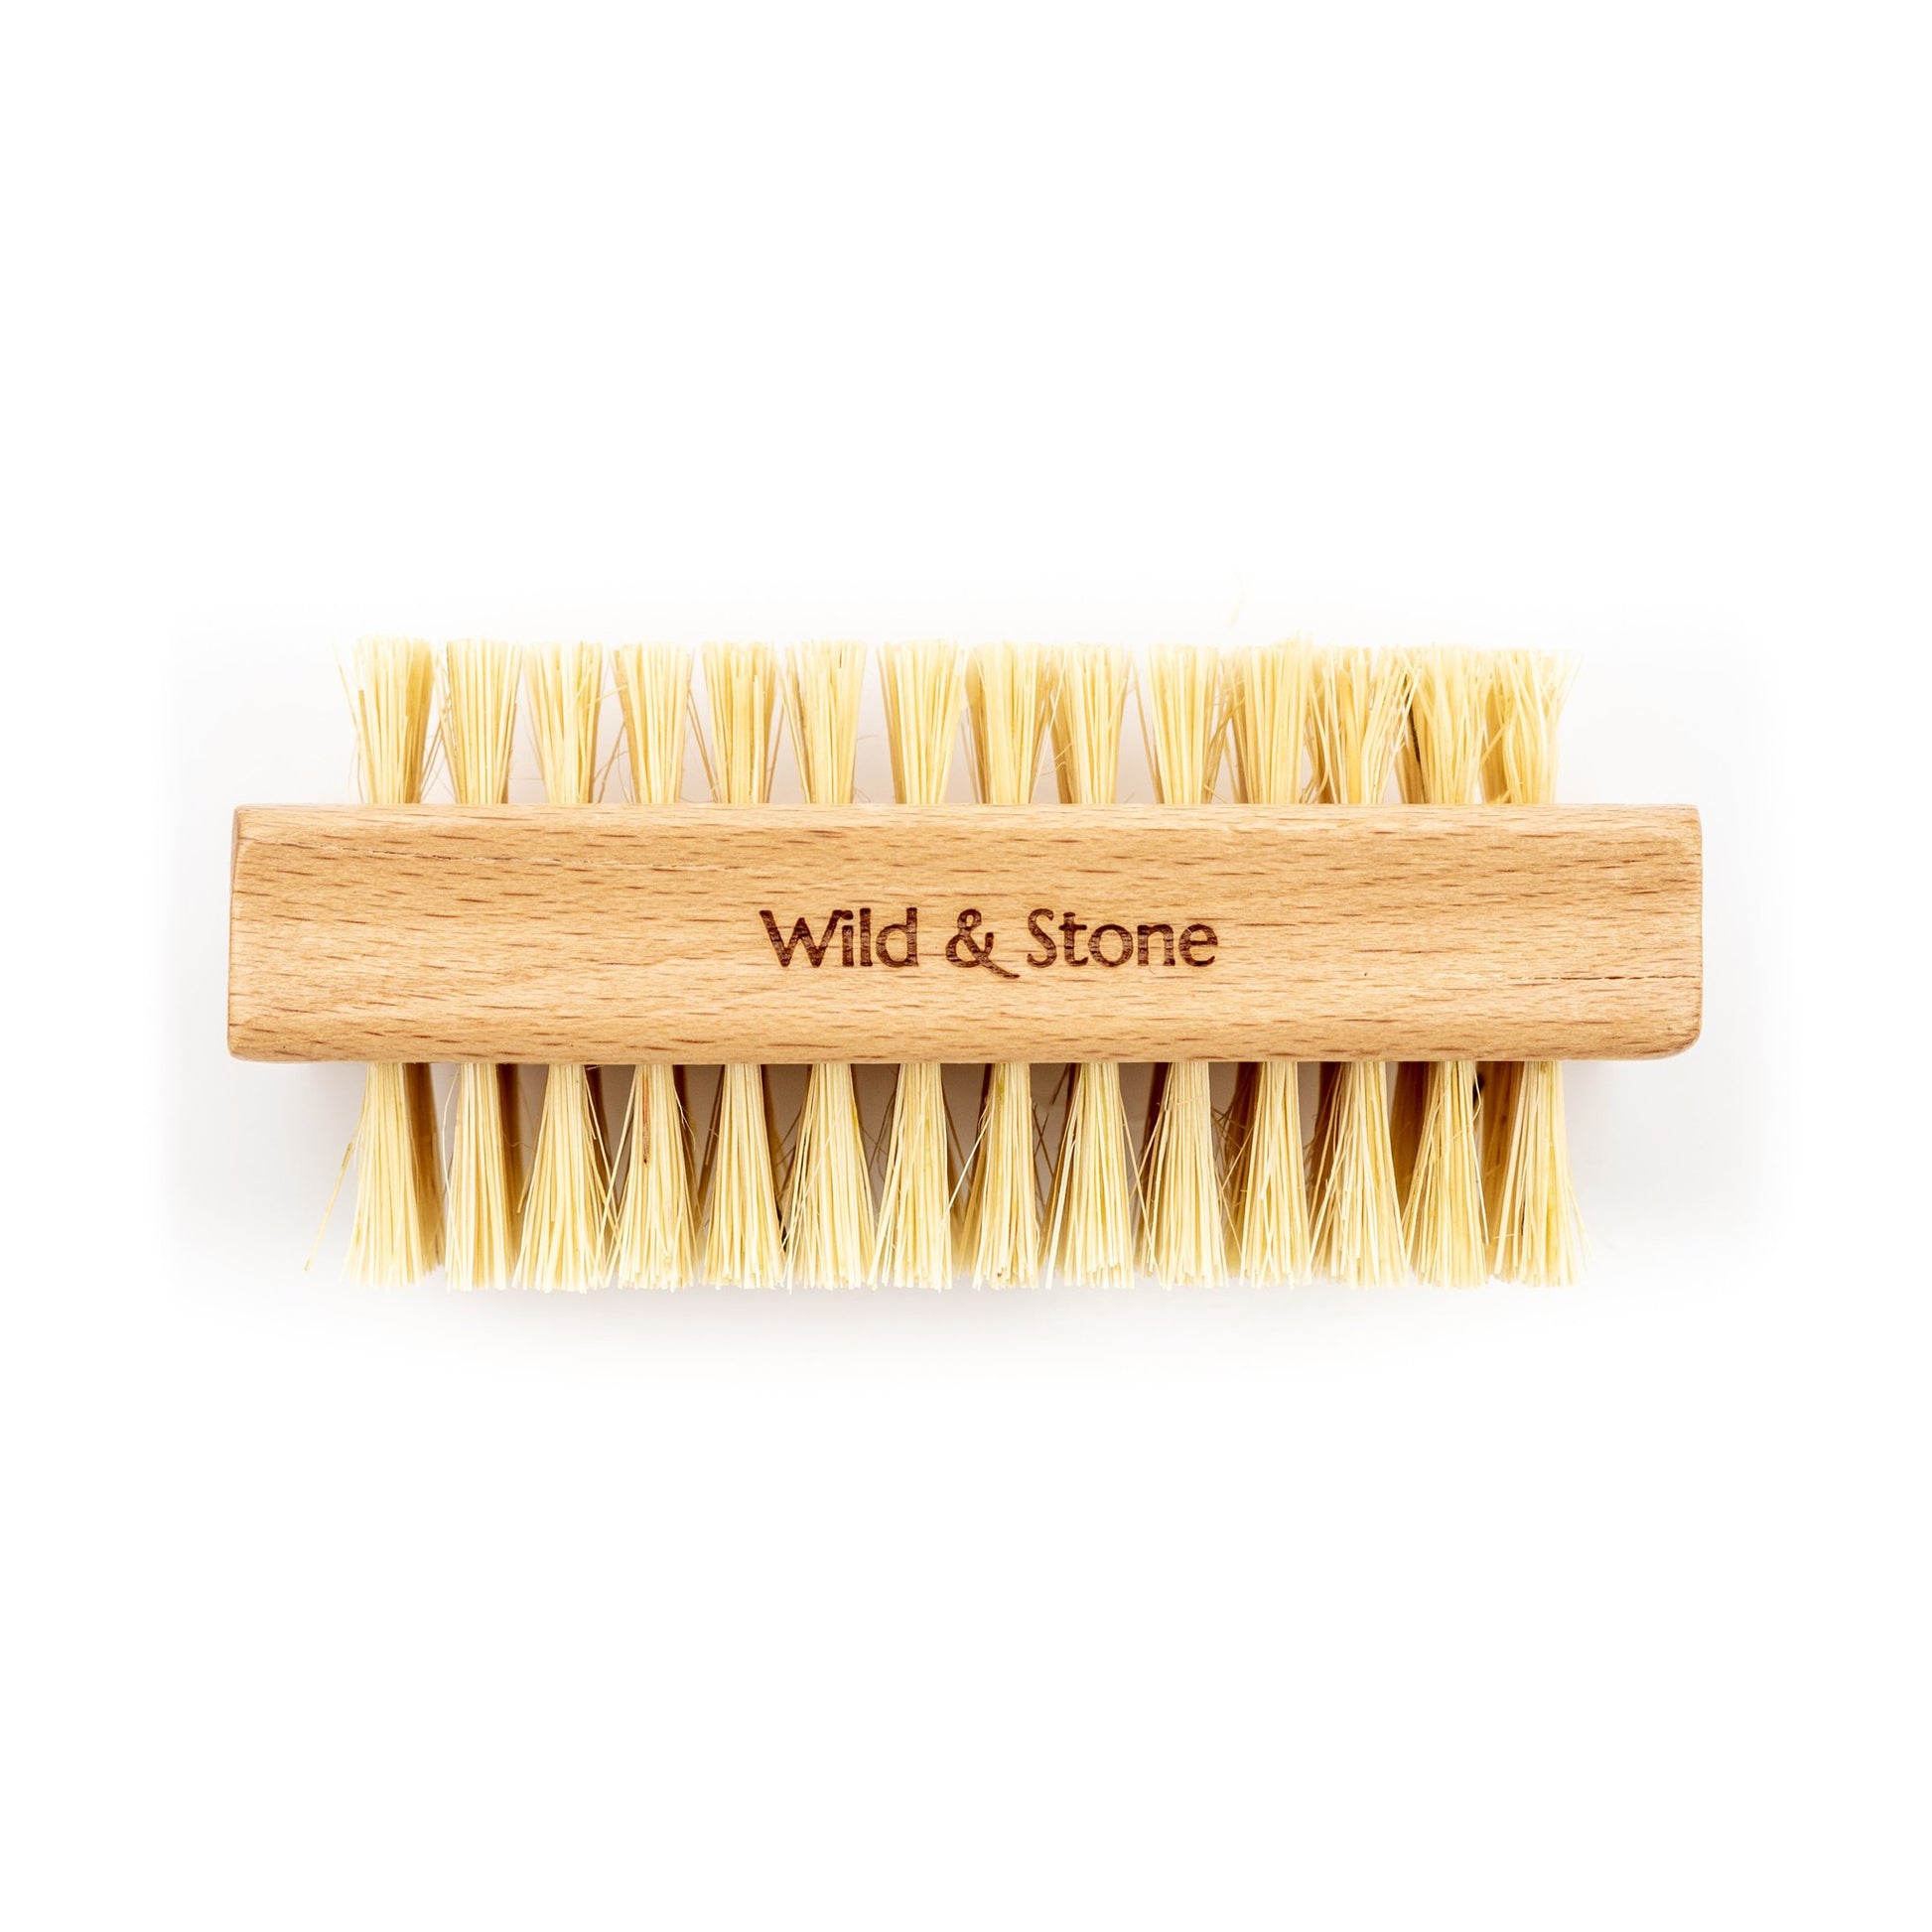 Wild & Stone Natural Bristle Nail Brush